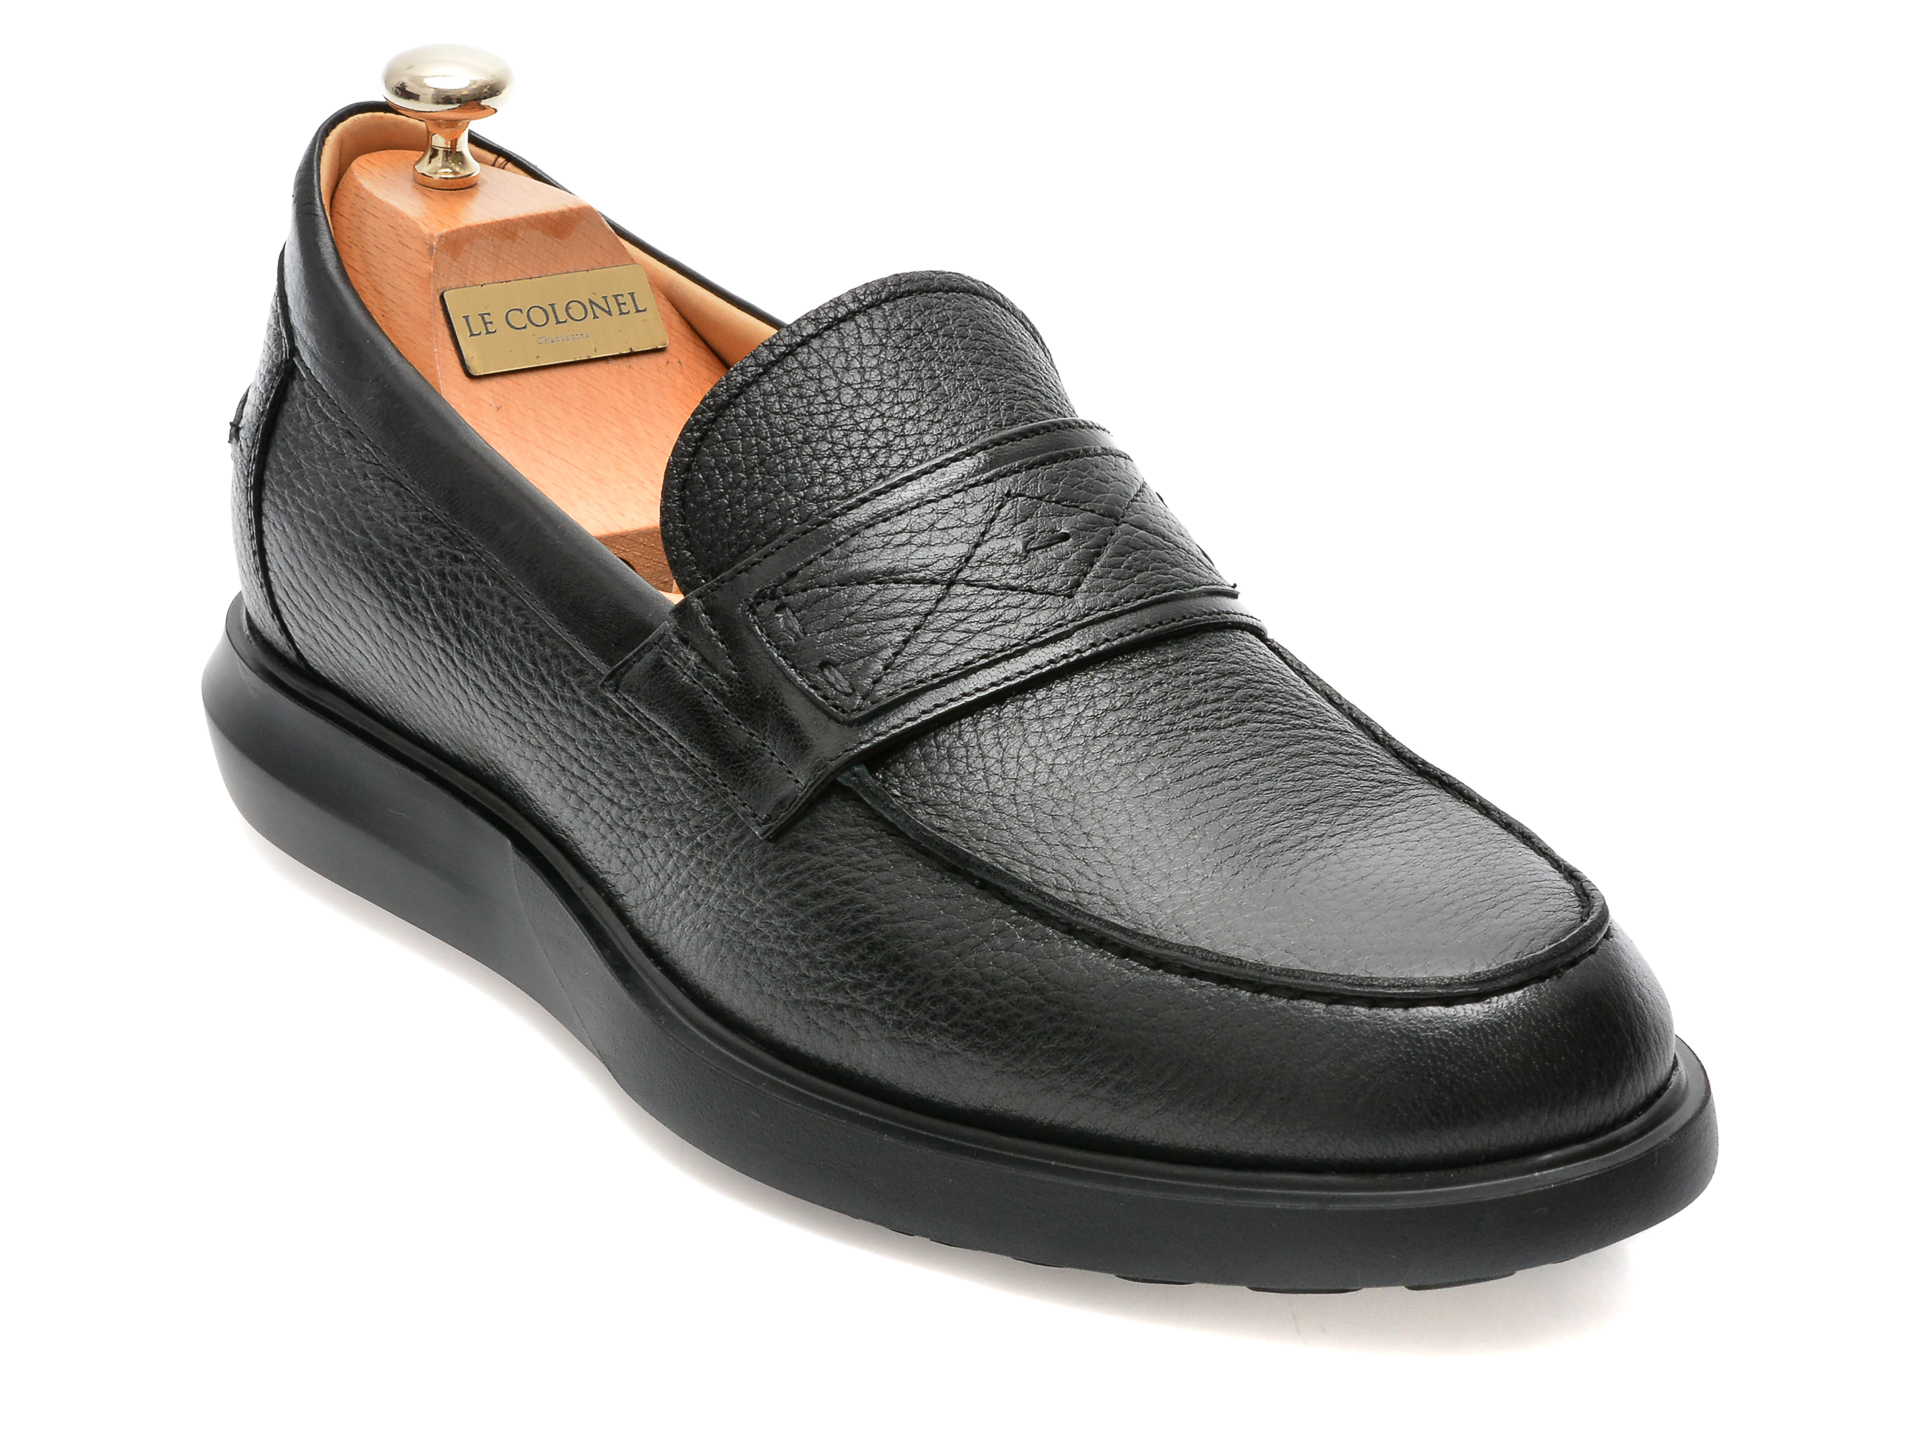 Pantofi LE COLONEL negri, 66616, din piele naturala /barbati/pantofi /barbati/pantofi